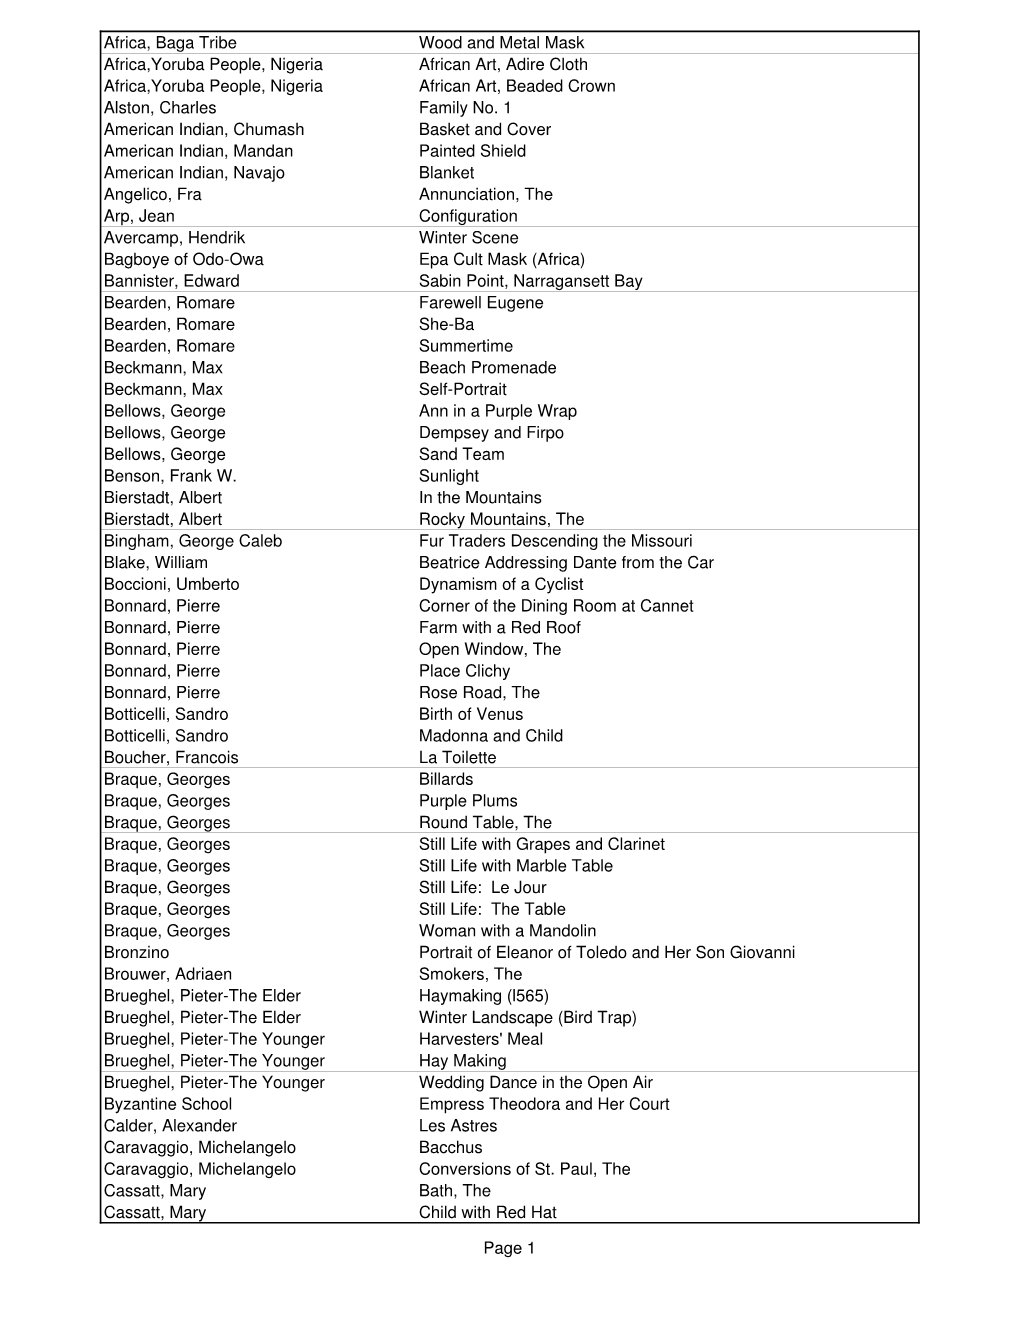 Print List for Web.XLS